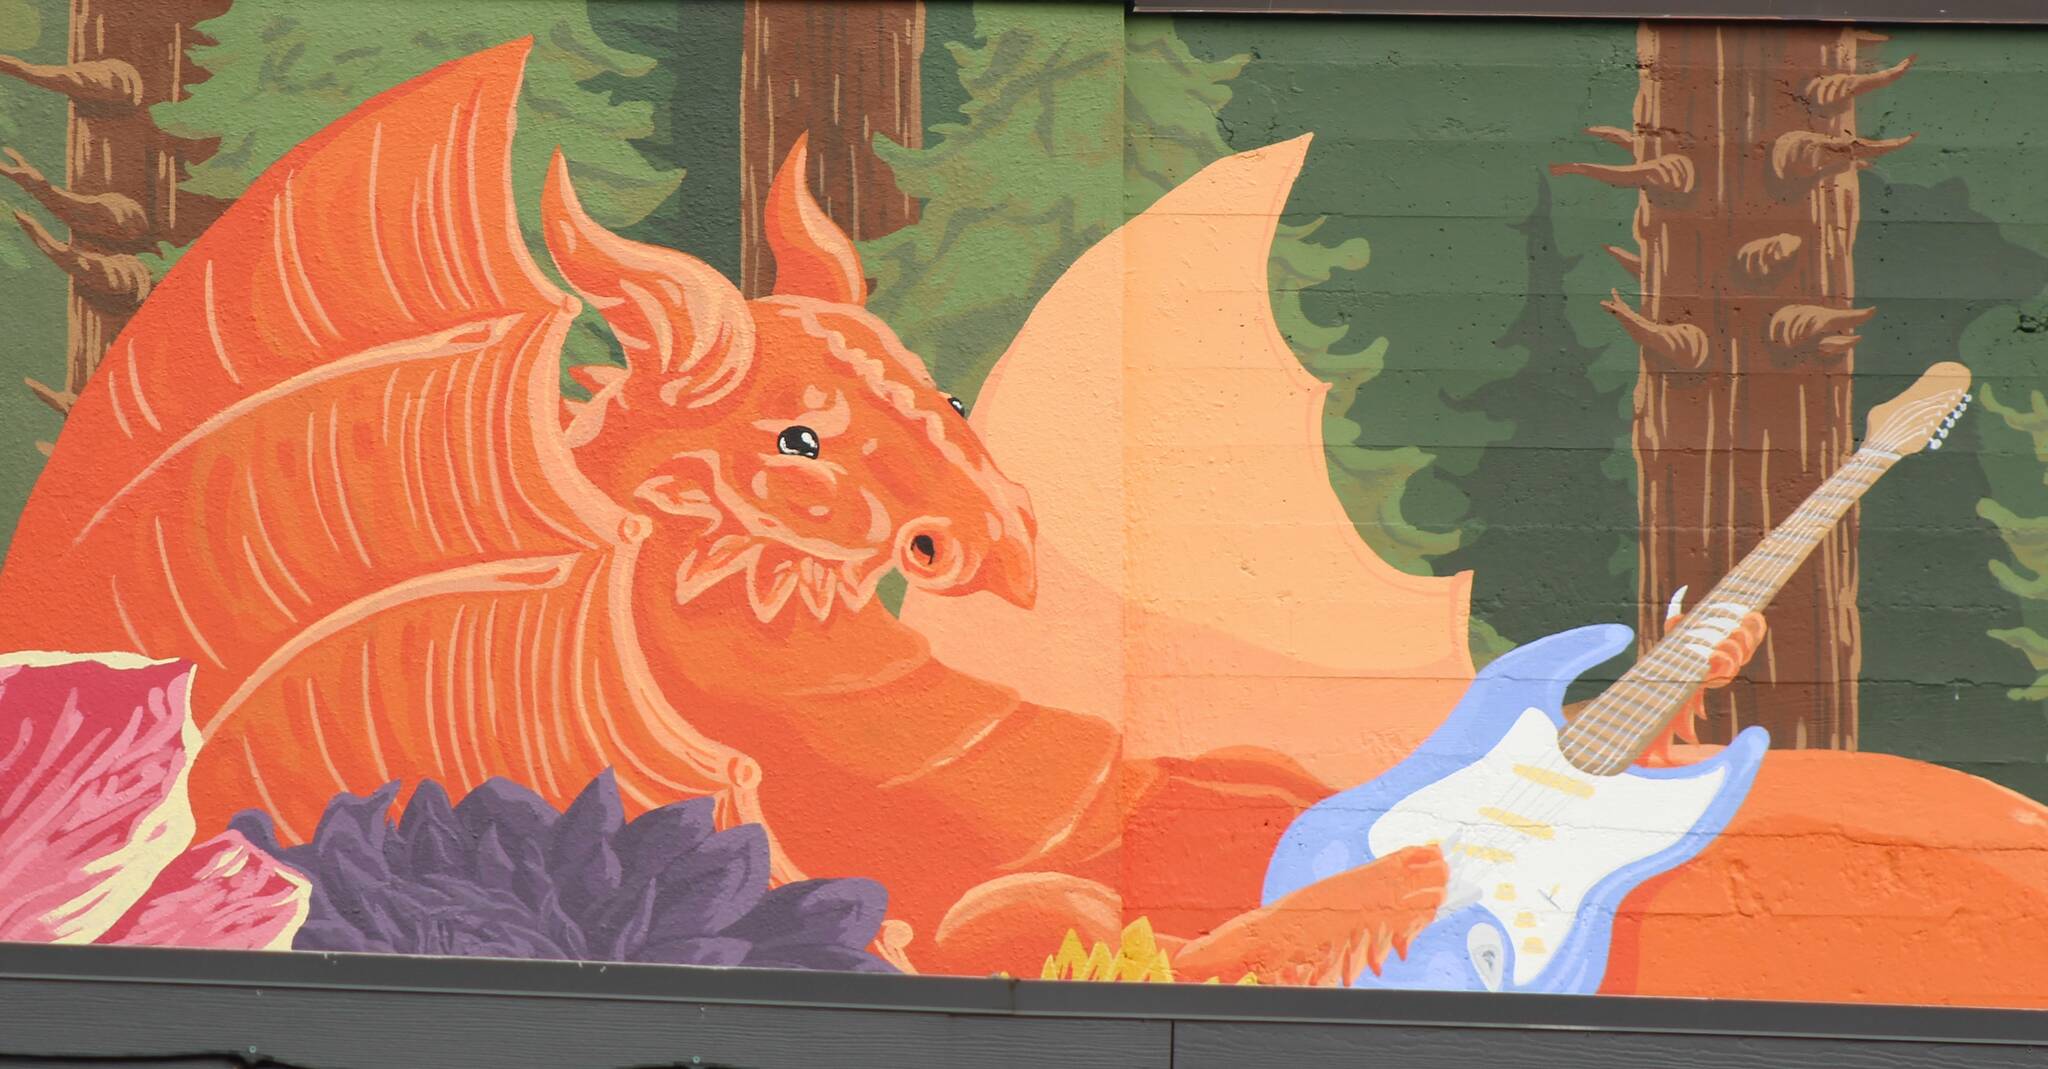 Bailey Jo Josie / Renton Reporter 
A mural of a dragon playing guitar in downtown Renton.